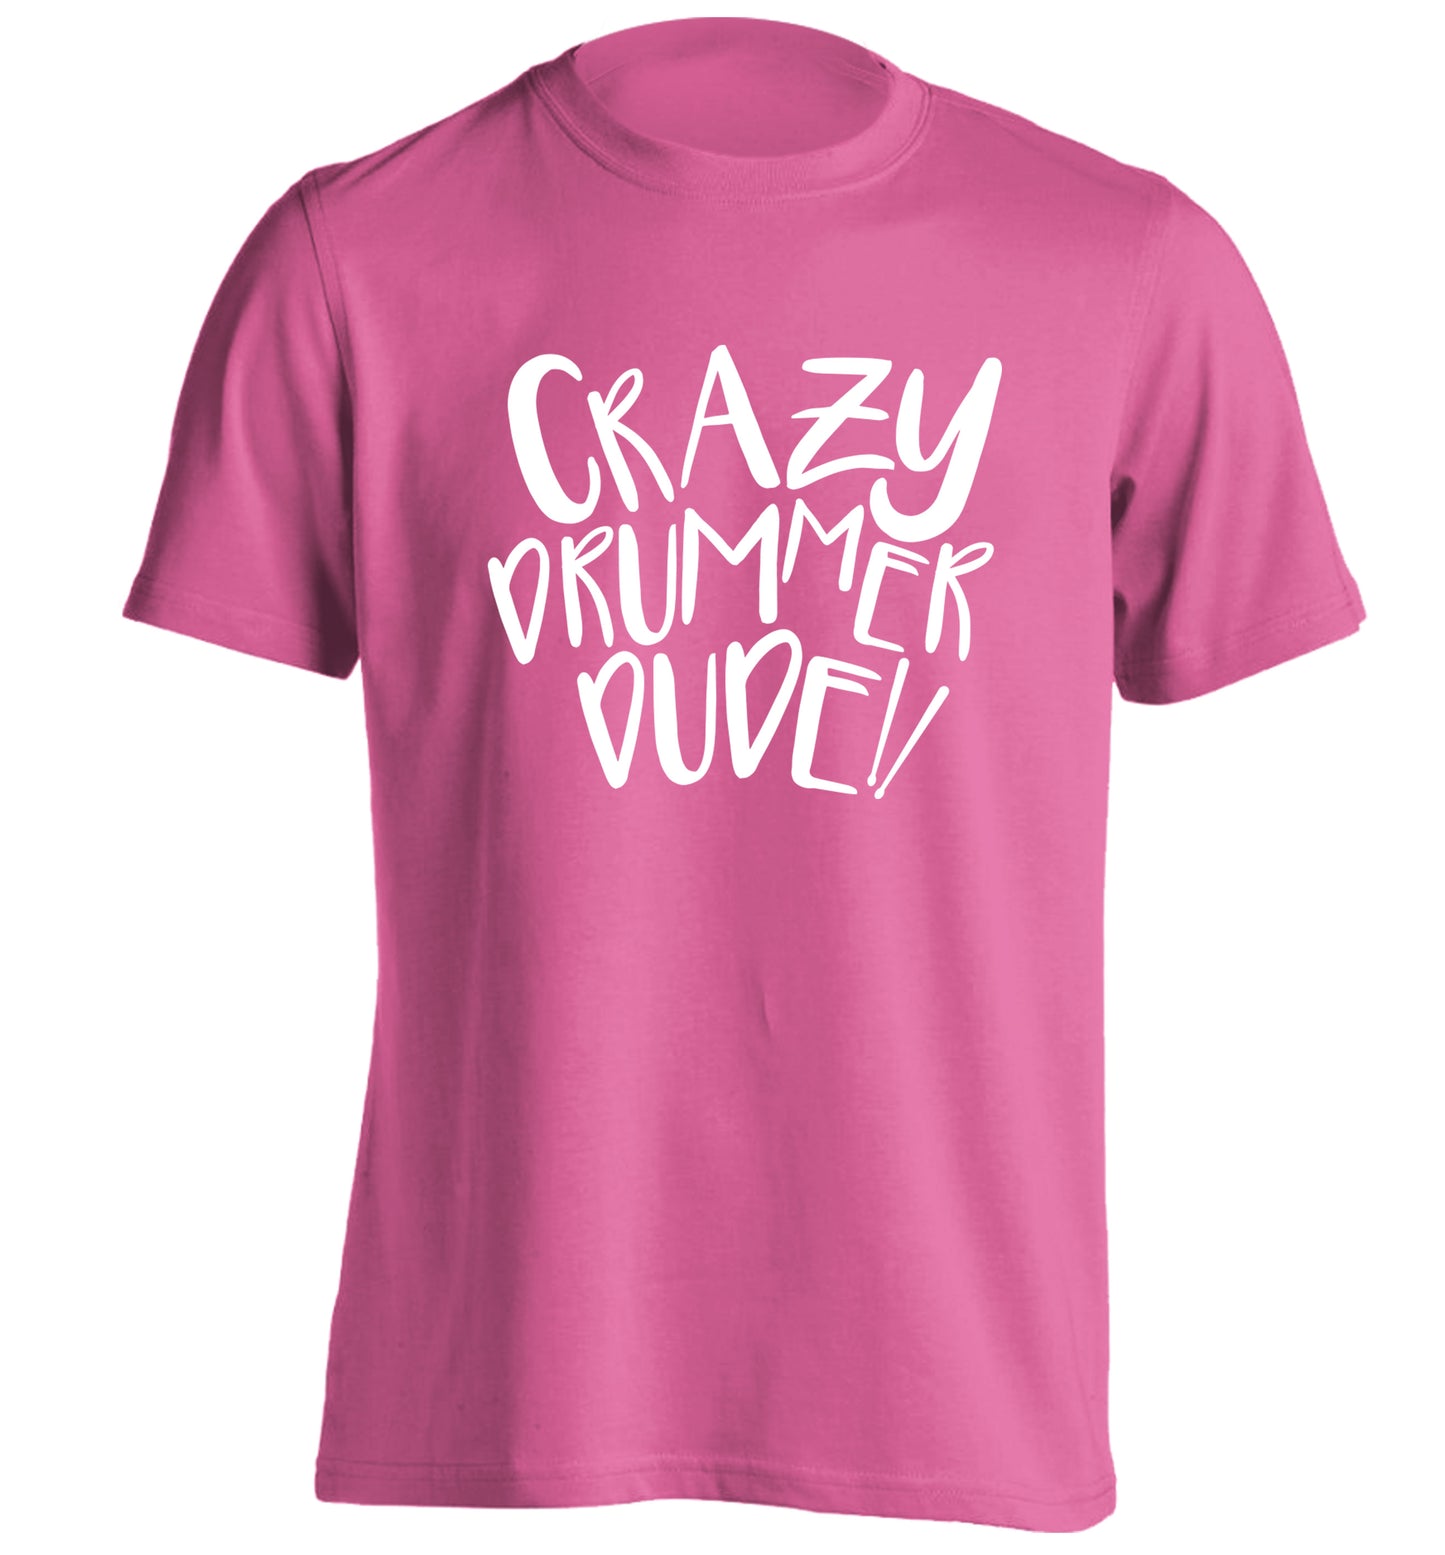 Crazy drummer dude adults unisex pink Tshirt 2XL